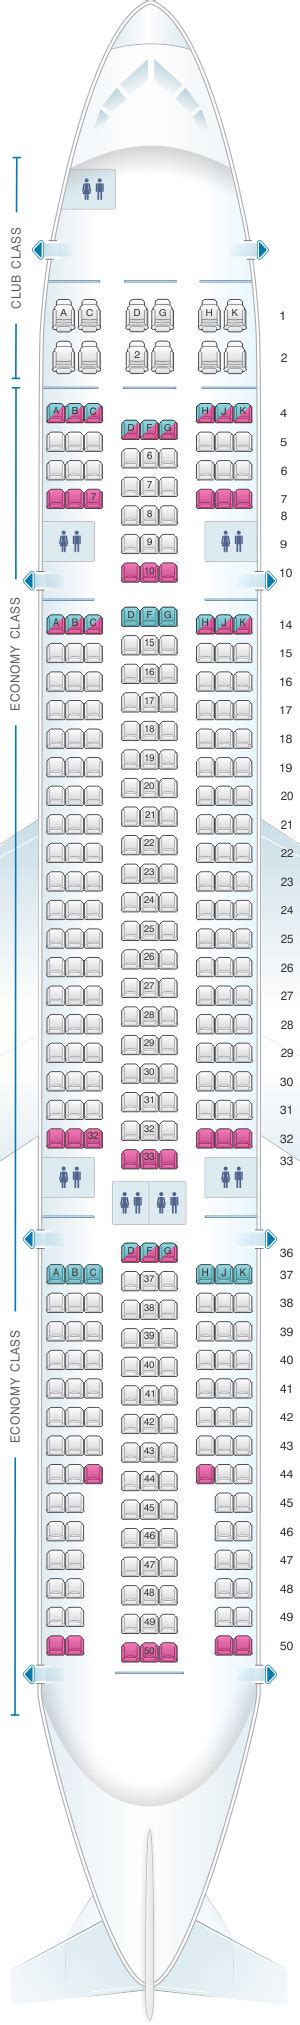 Air Transat A330 Seat Map